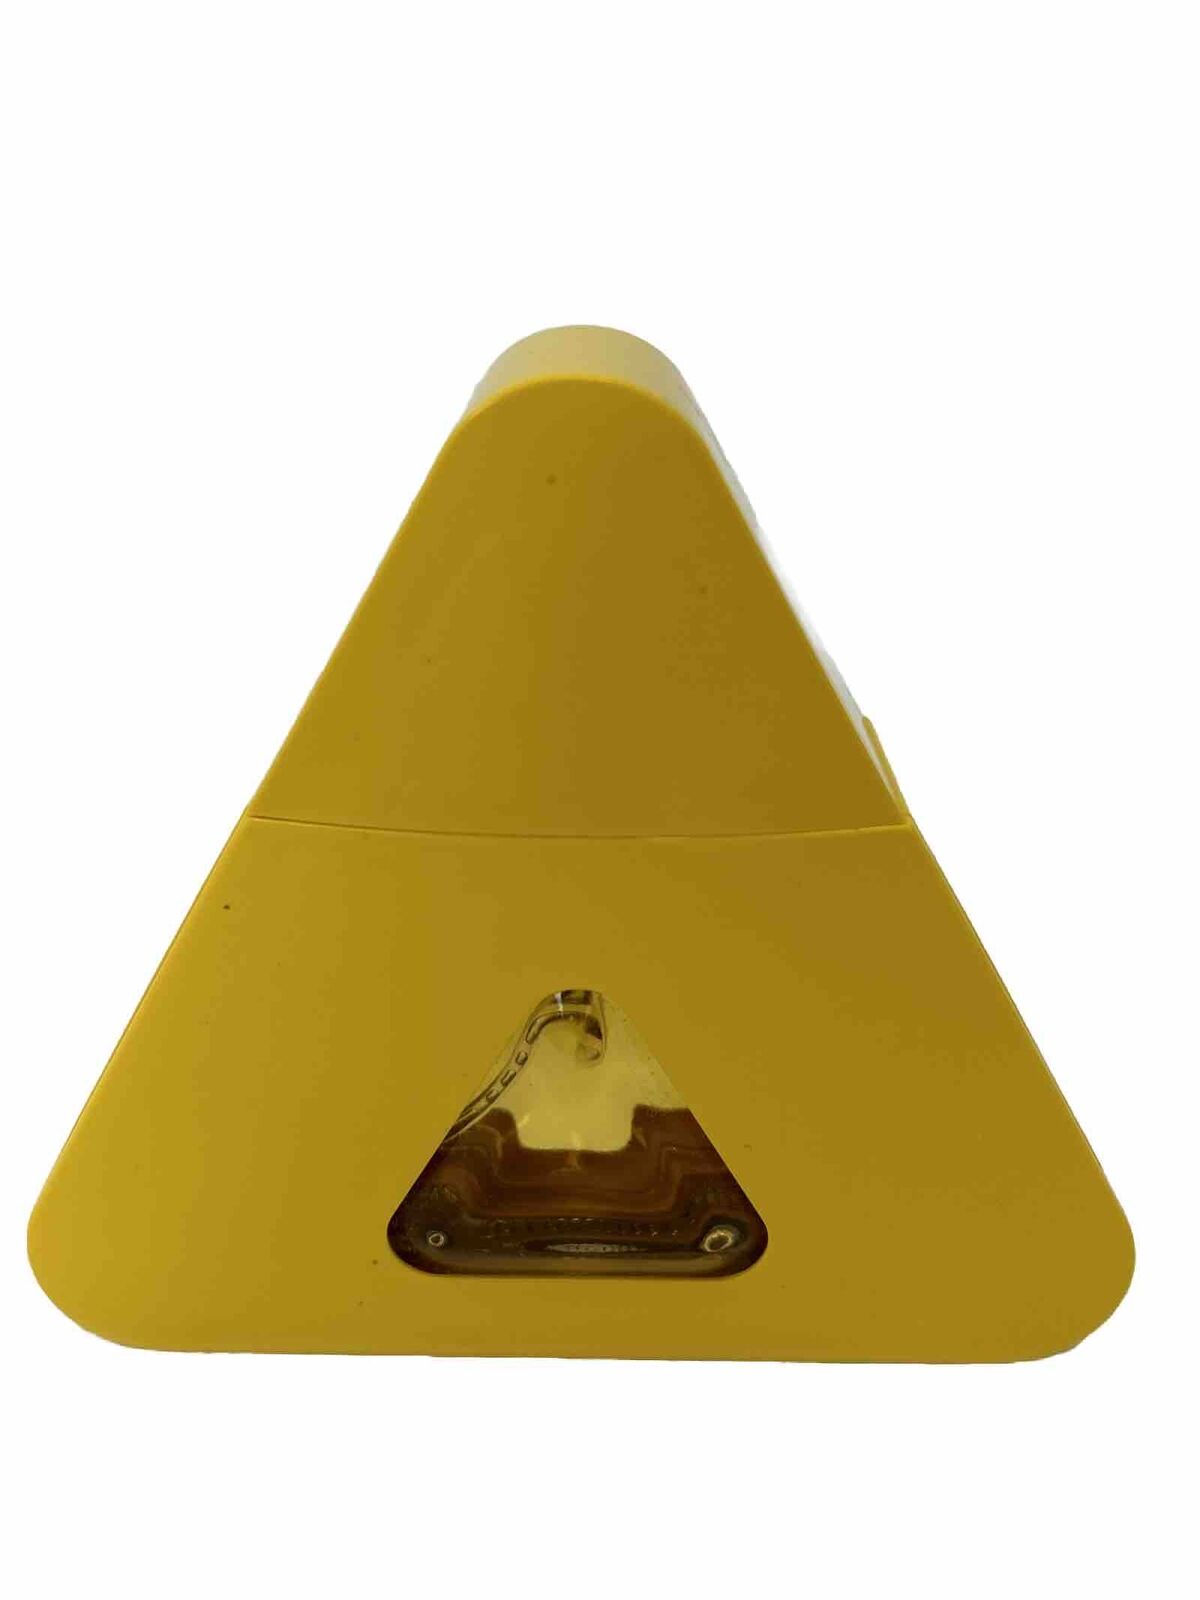 Liz Claiborne Signature Eau de Toilette Spray 2oz Vintage Yellow Triangle Full